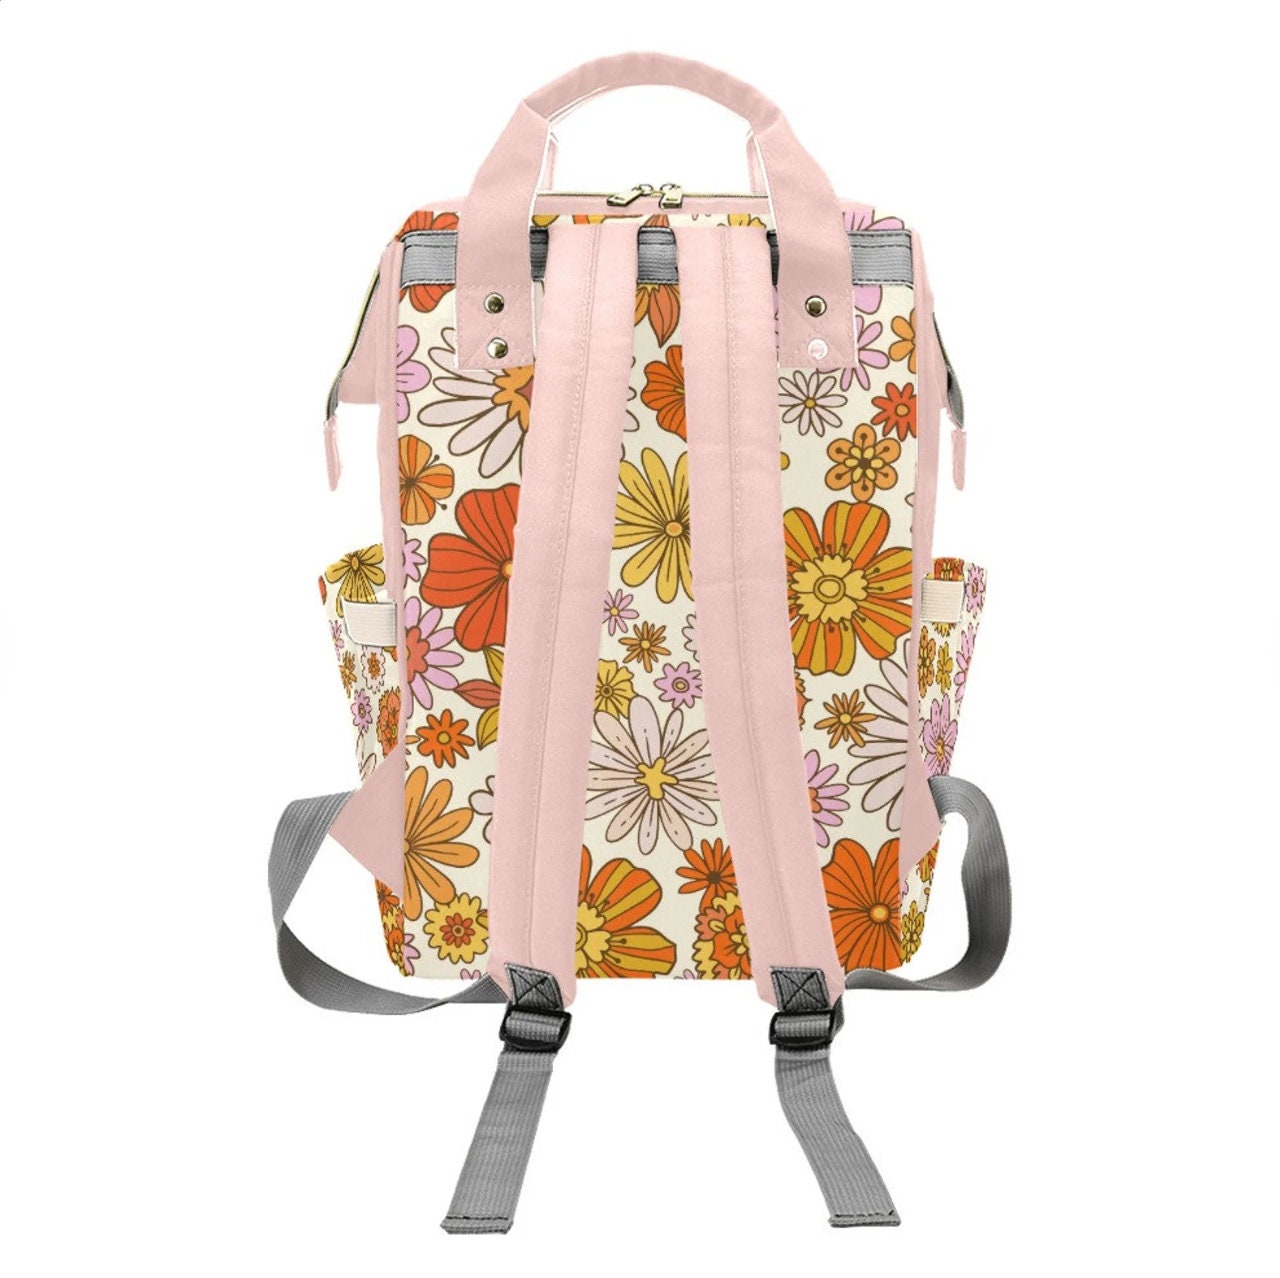 Retro Orange Pink backpack, Women's Backpack, Women's Bags, Floral backpack, Vintage style backpack, Hippie Style bag, Fashion Backpack